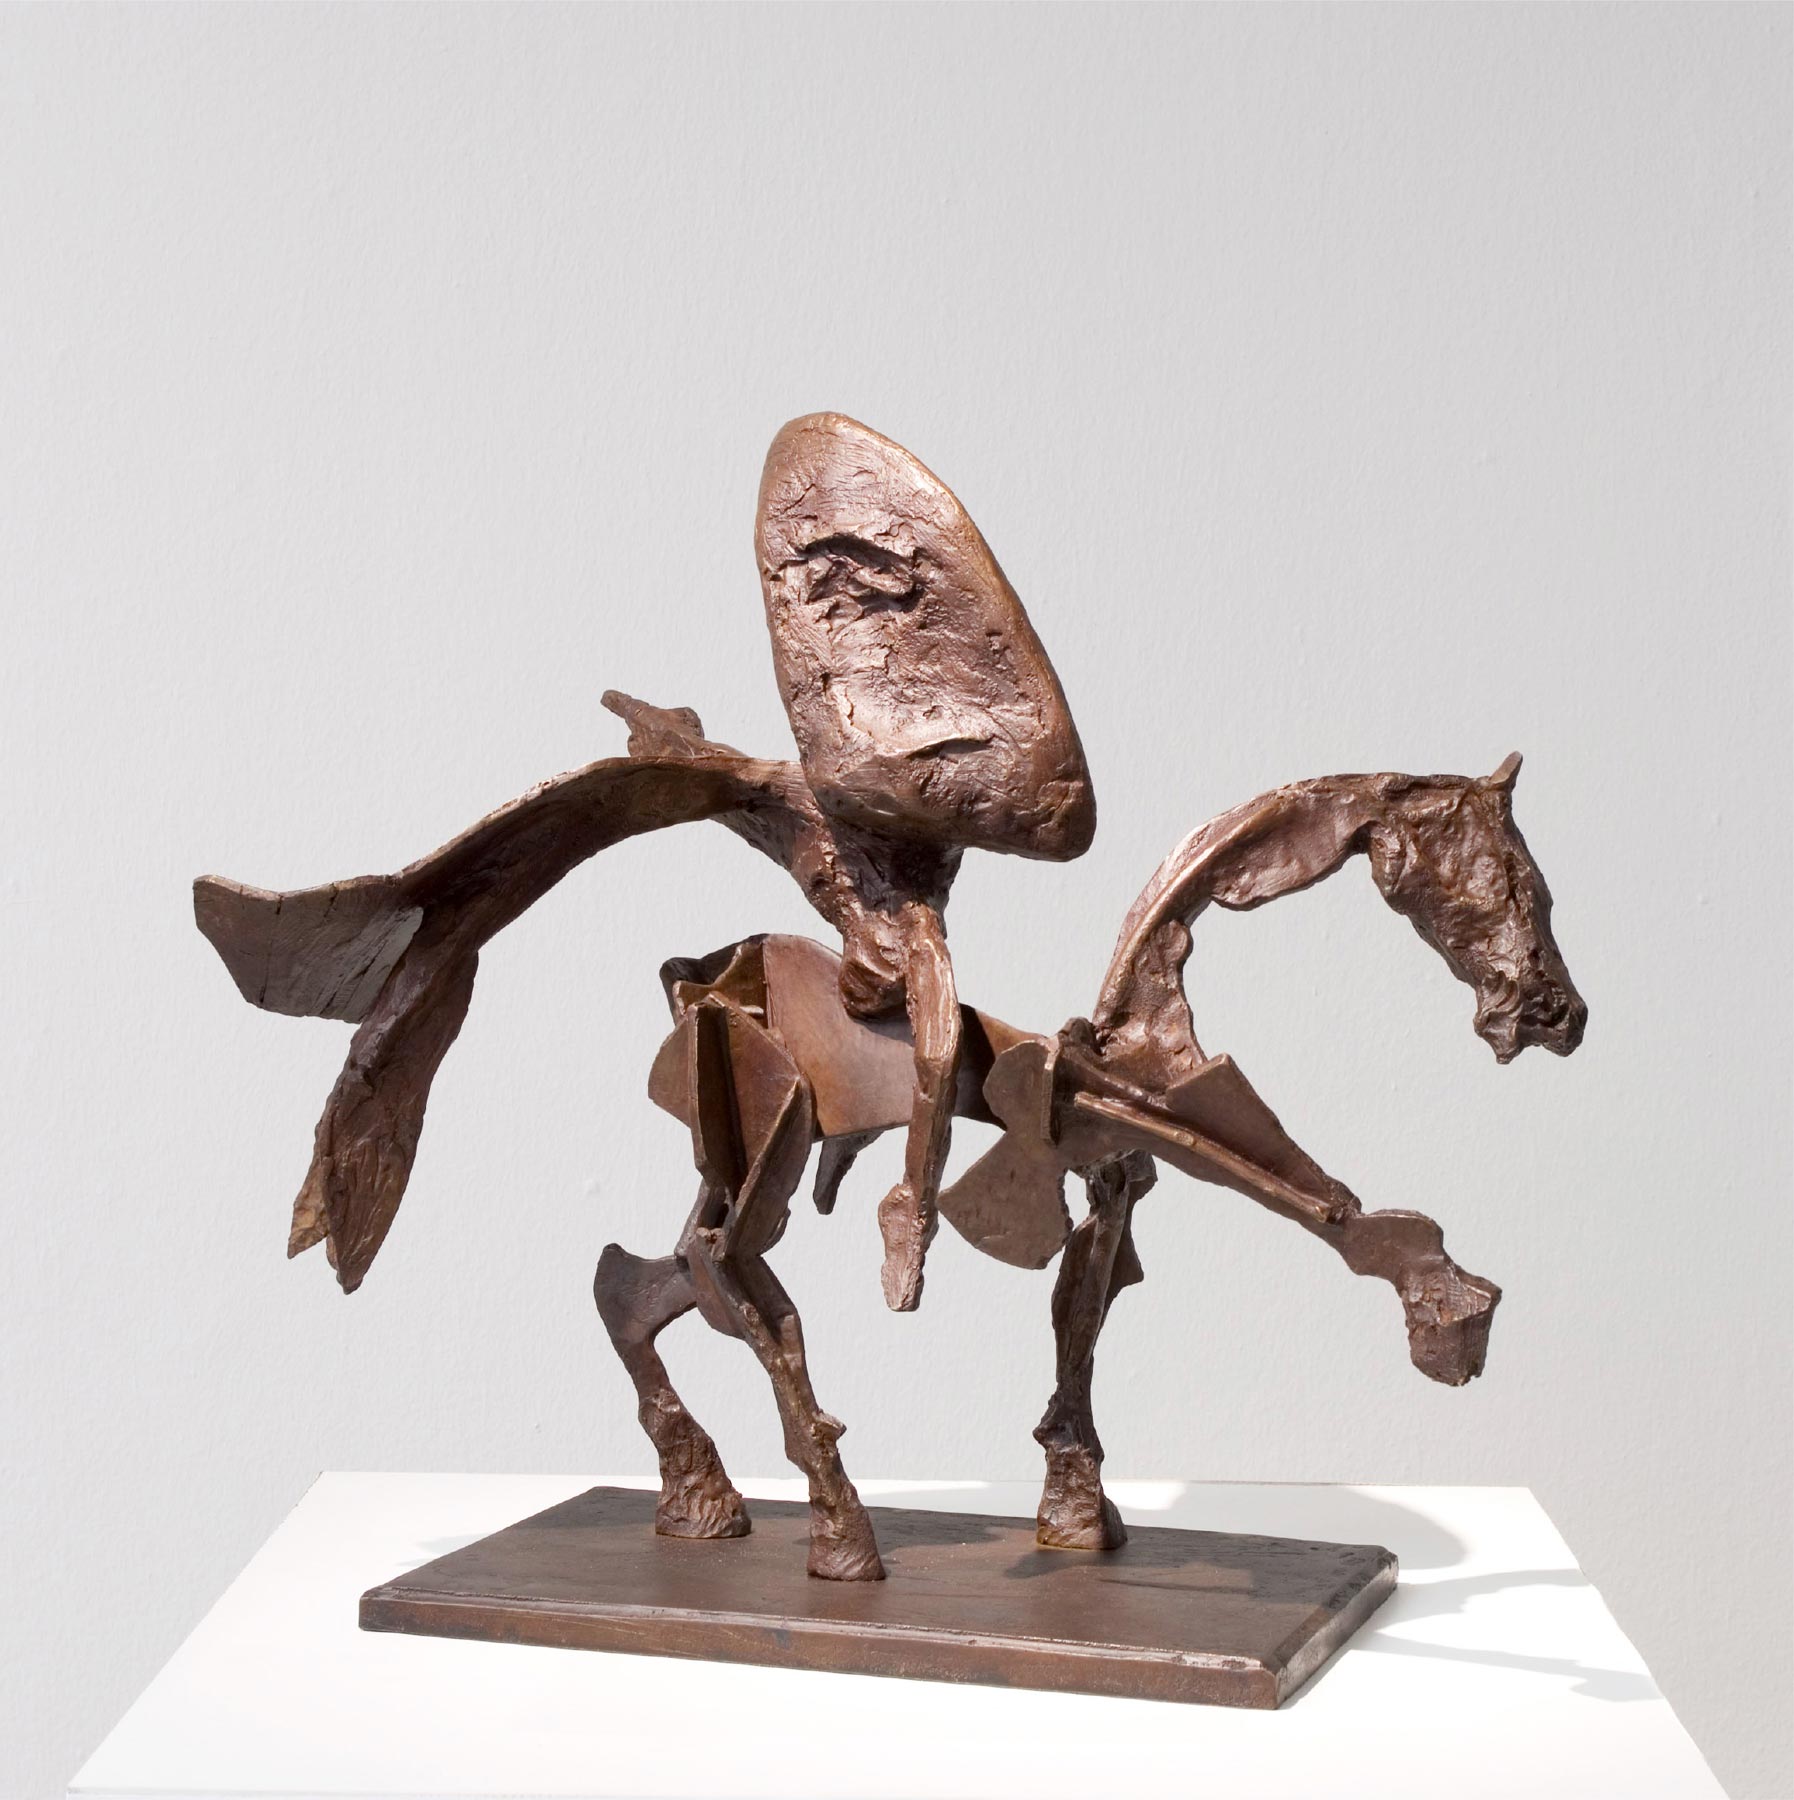 William Kentridge, Untitled VI (Nose on Horse:Napoleon) (2007; bronzo, 42 x 46 x 19 cm; Rimini, PART)
